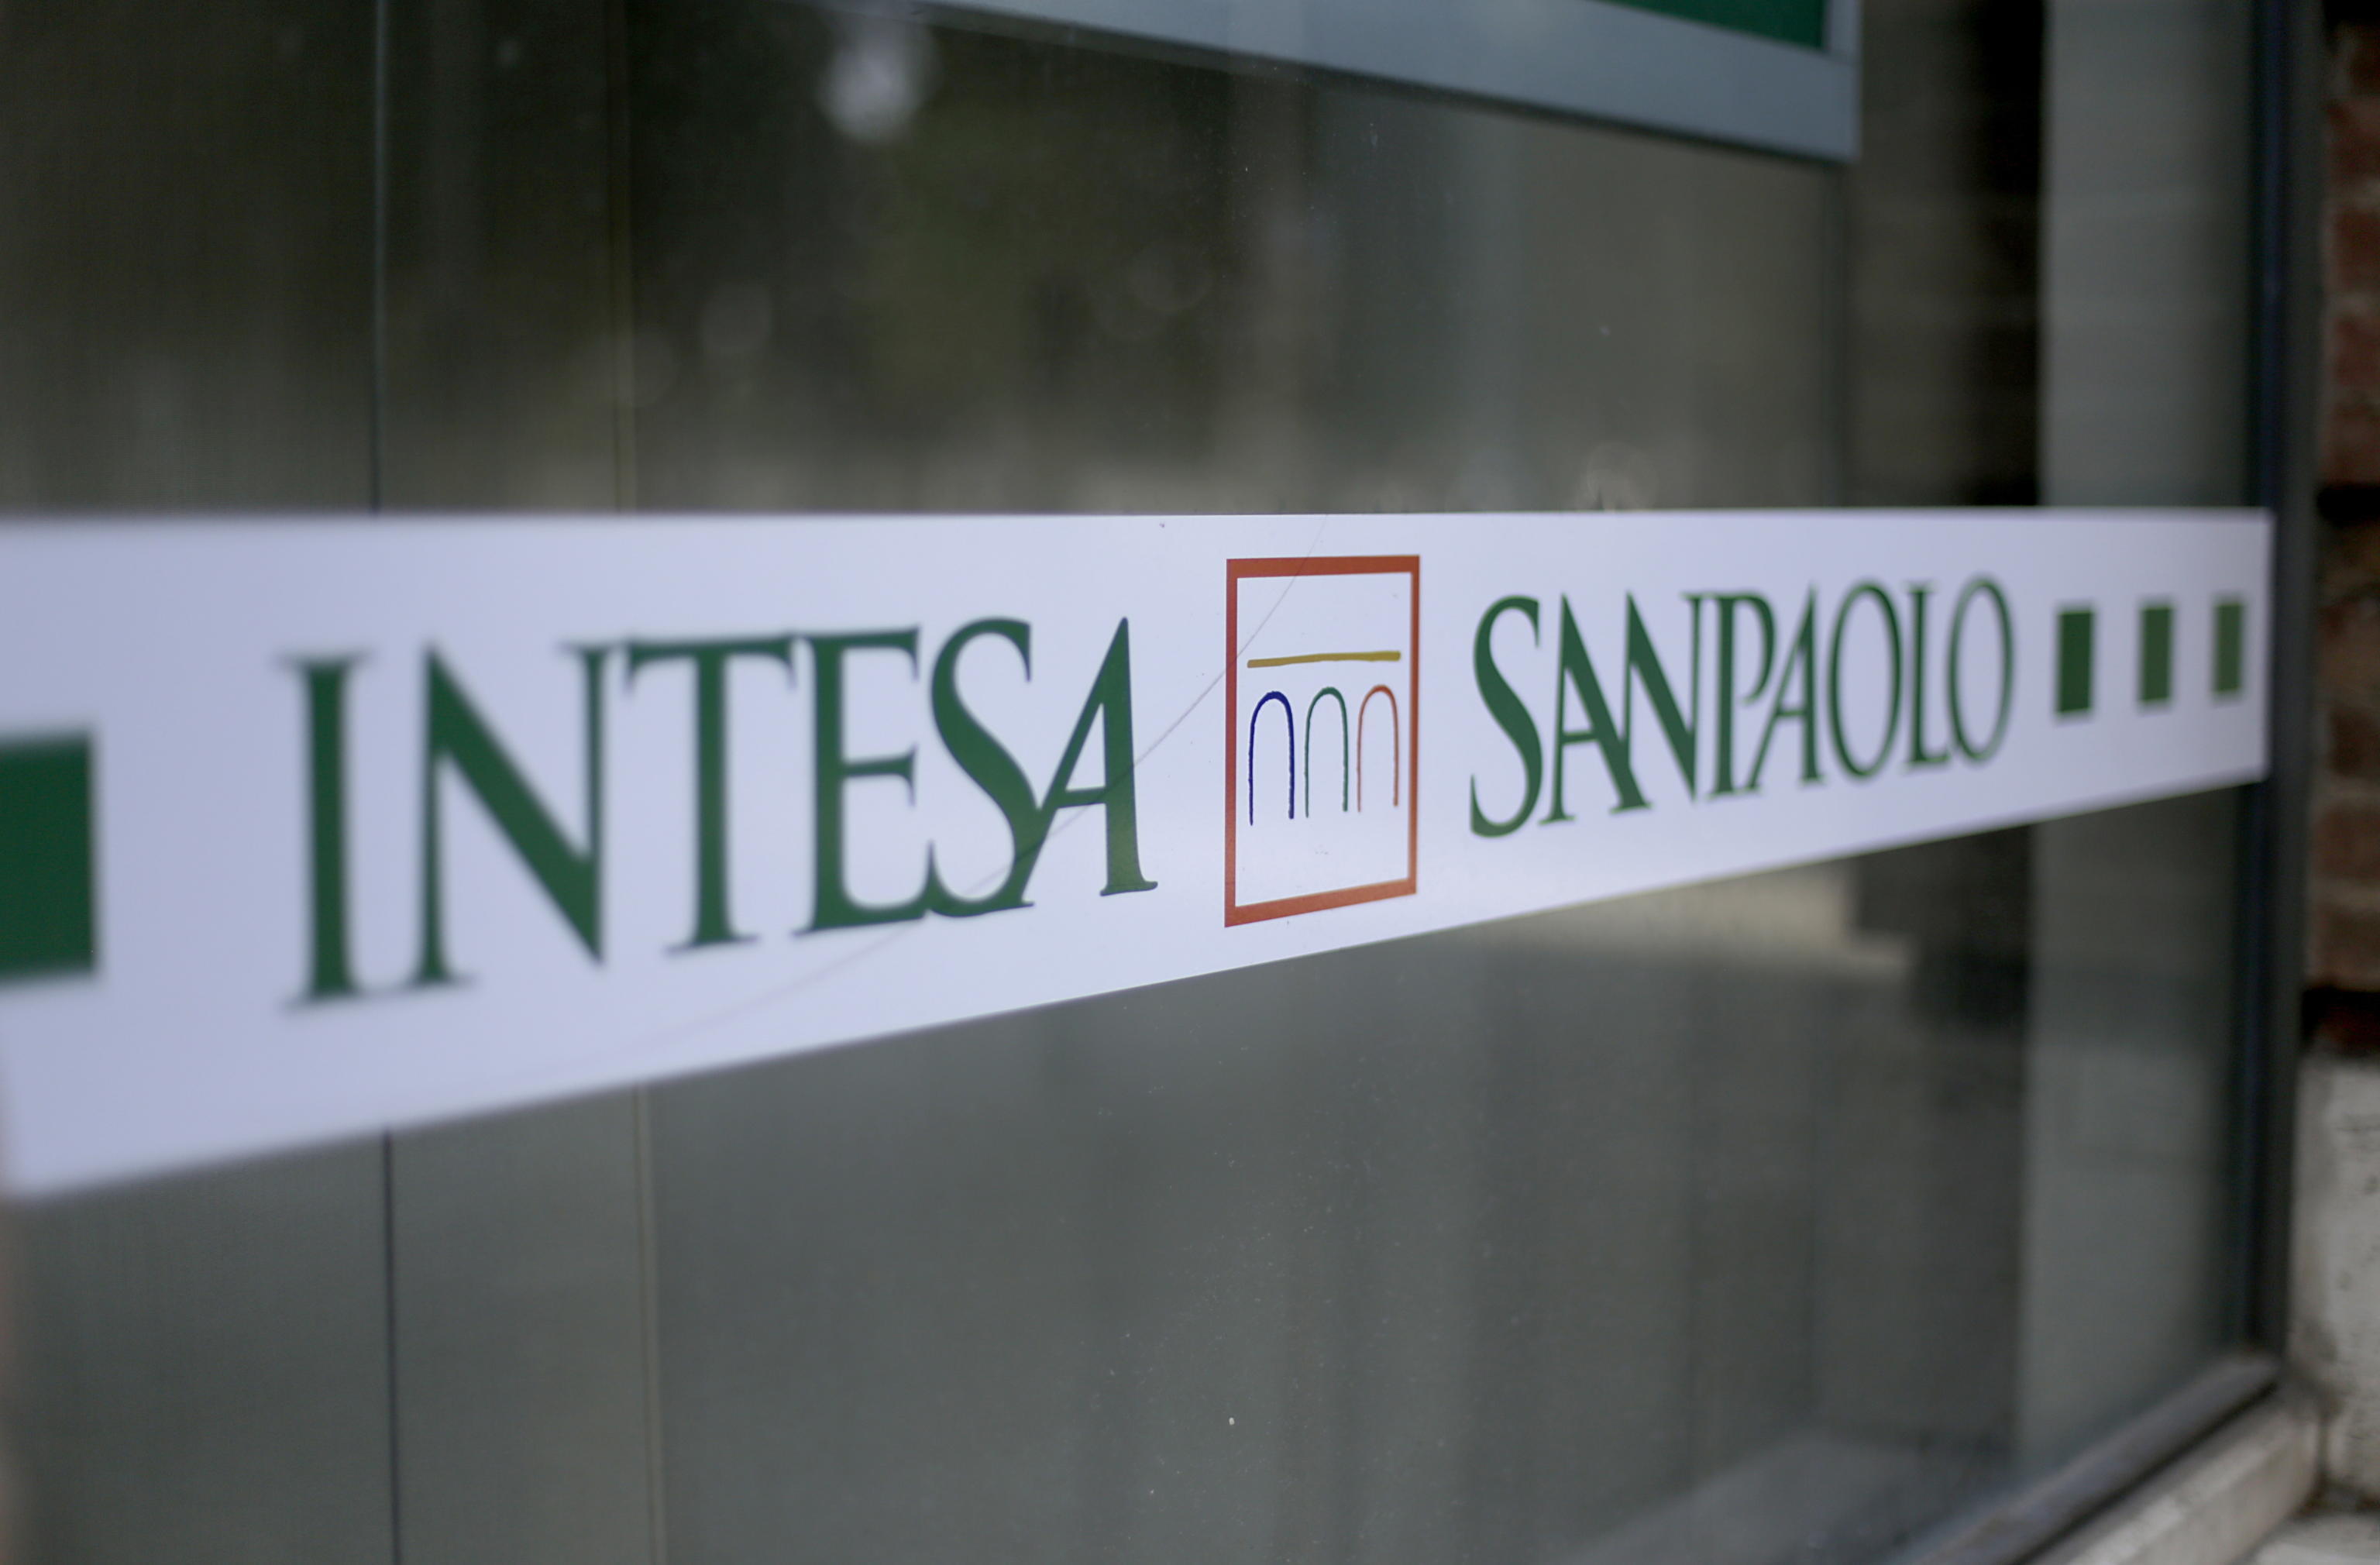 Intesa sanpaolo. Крупнейшие банки Италии. Intesa Sanpaolo список банков Италии. Банк Интеза реклама. Крупнейшие банки Италии система.